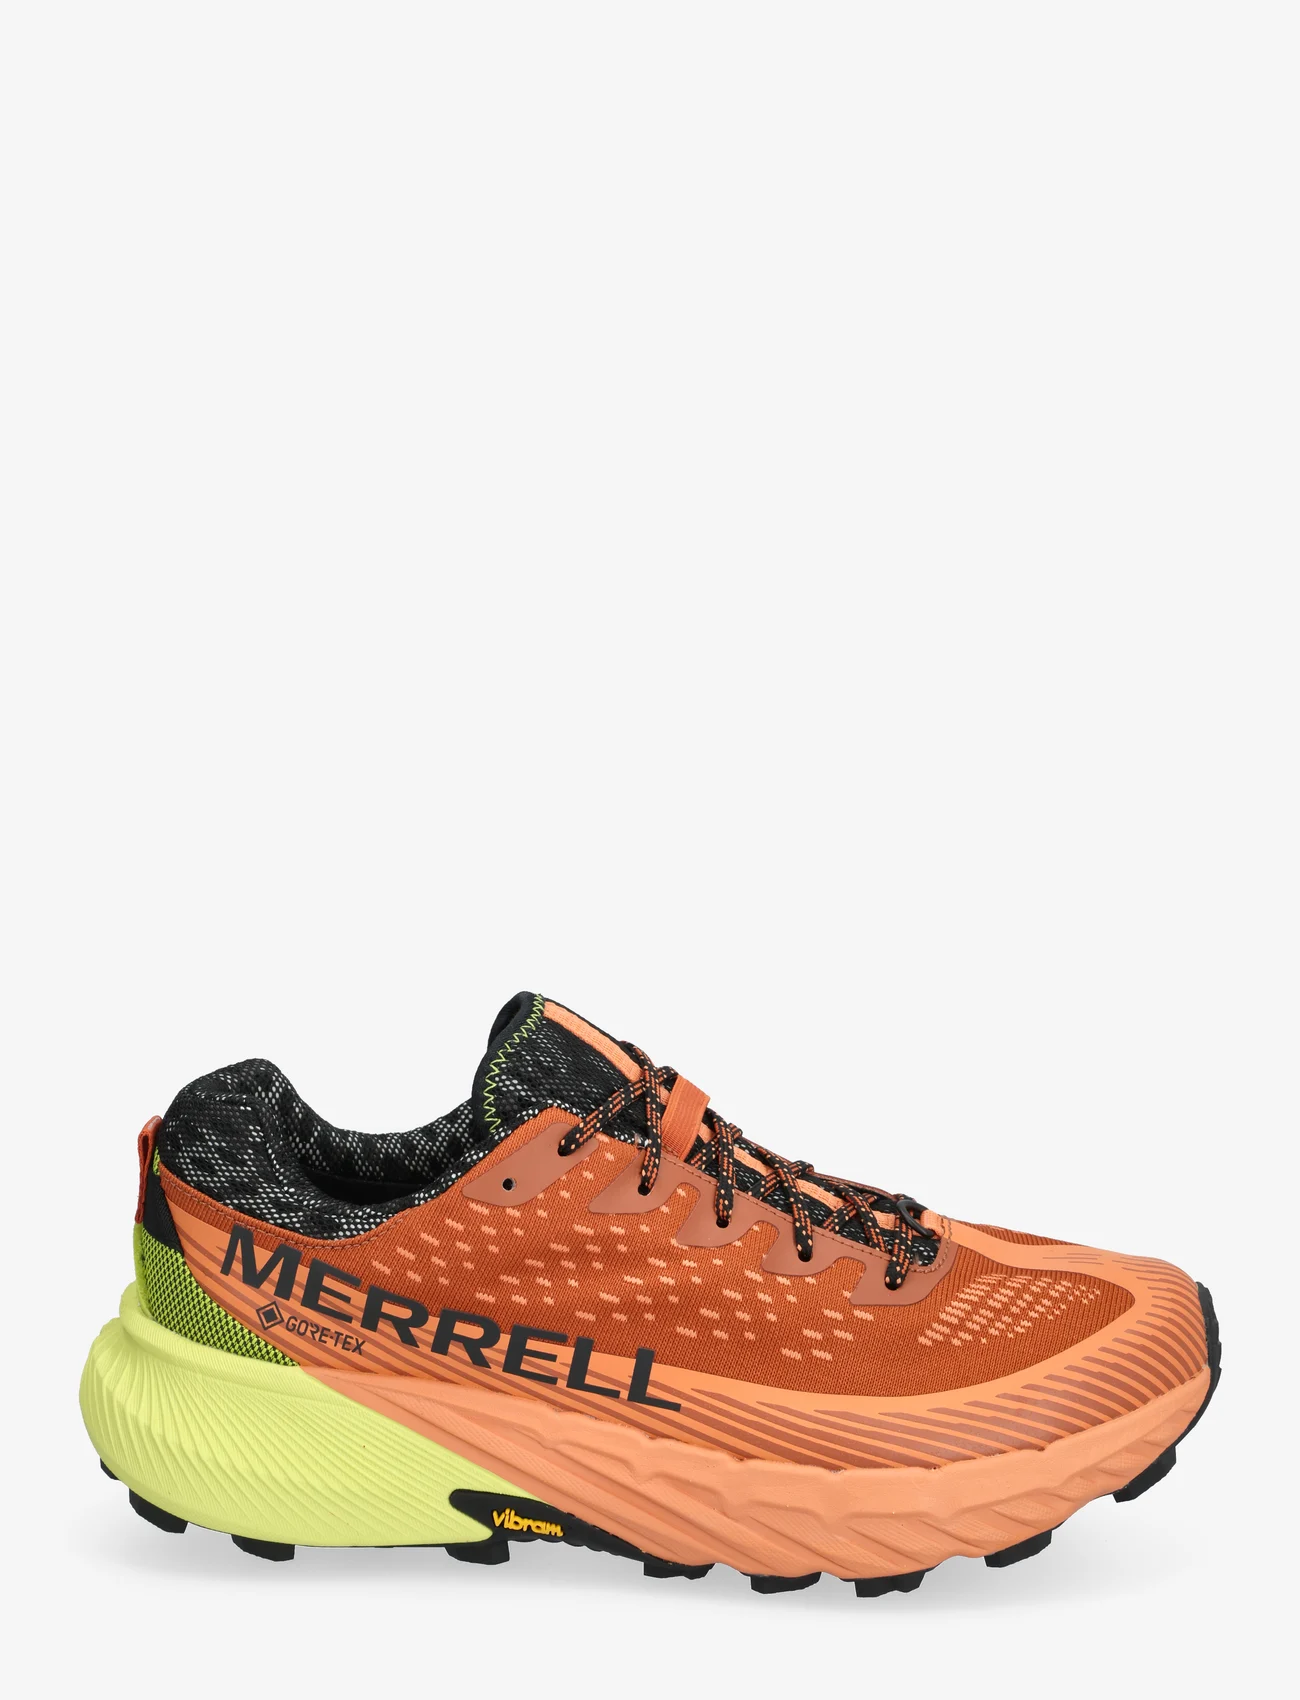 Merrell - Men's Agility Peak 5 GTX - Clay/Mel - running shoes - clay/melon - 1